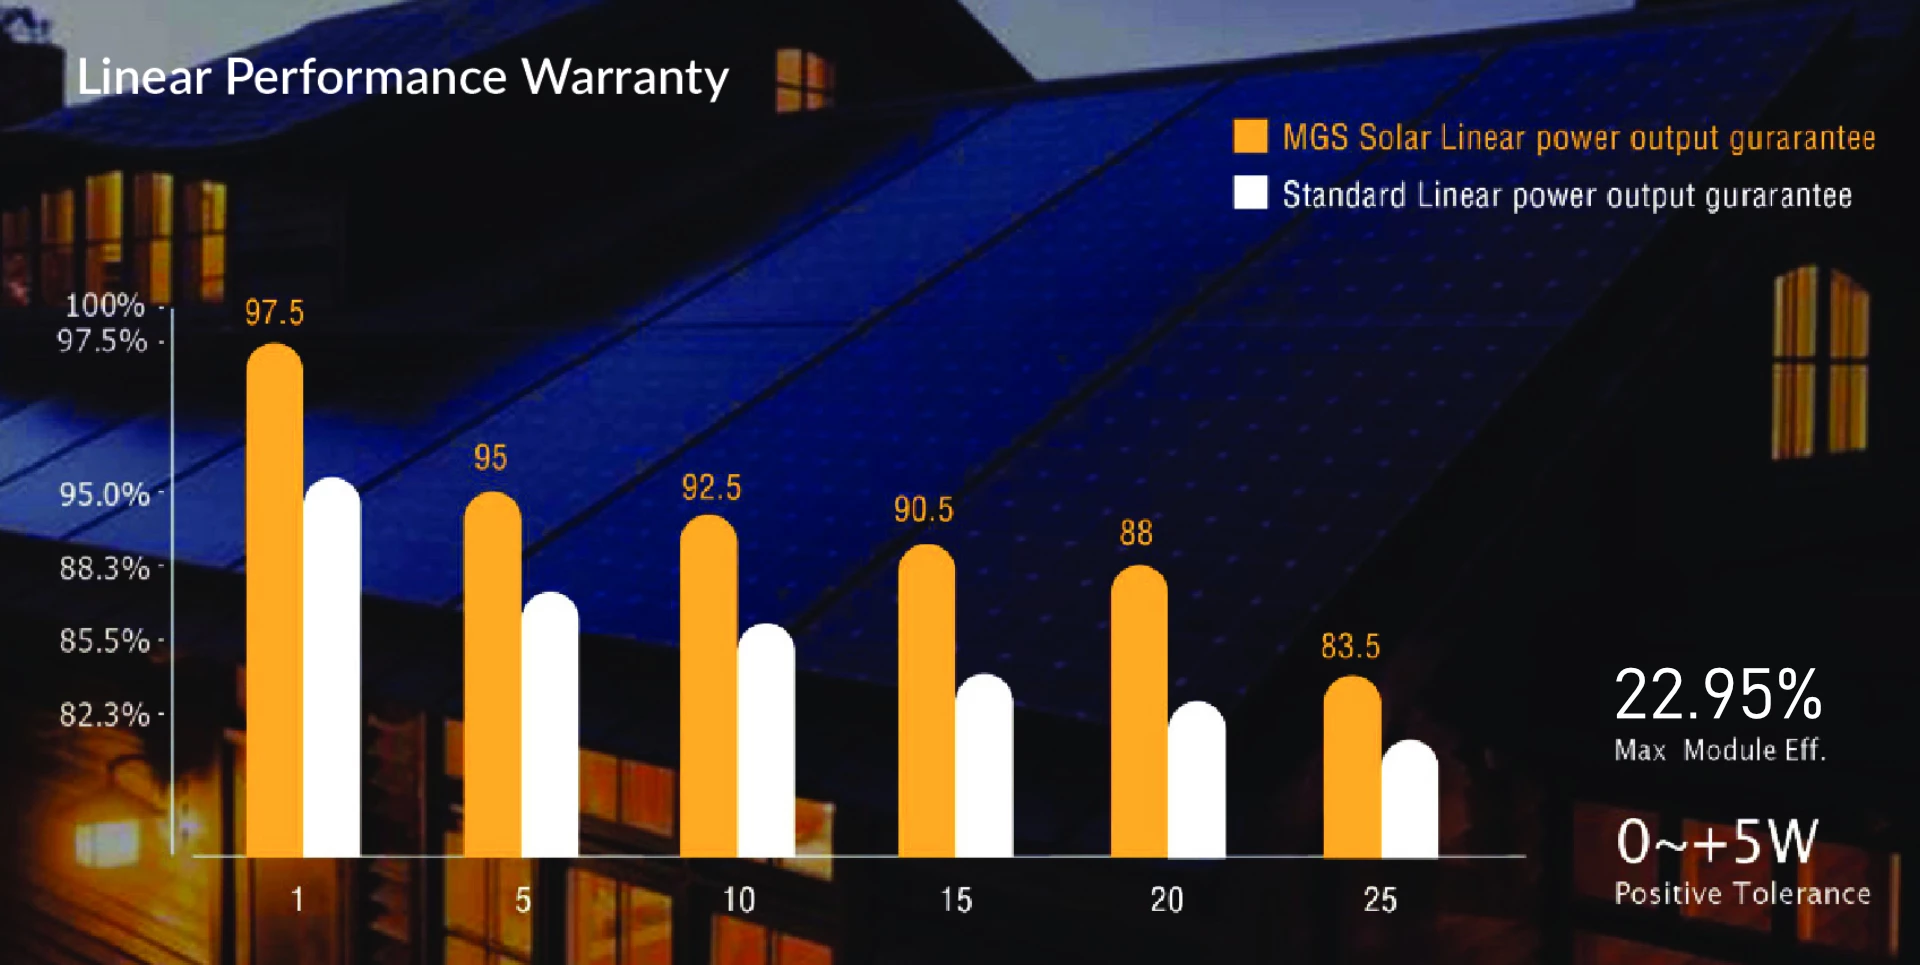 Linear Perform Warranty Bar chart showing MGS solar linear power output gurarantee vs standard linear power output gurarantee